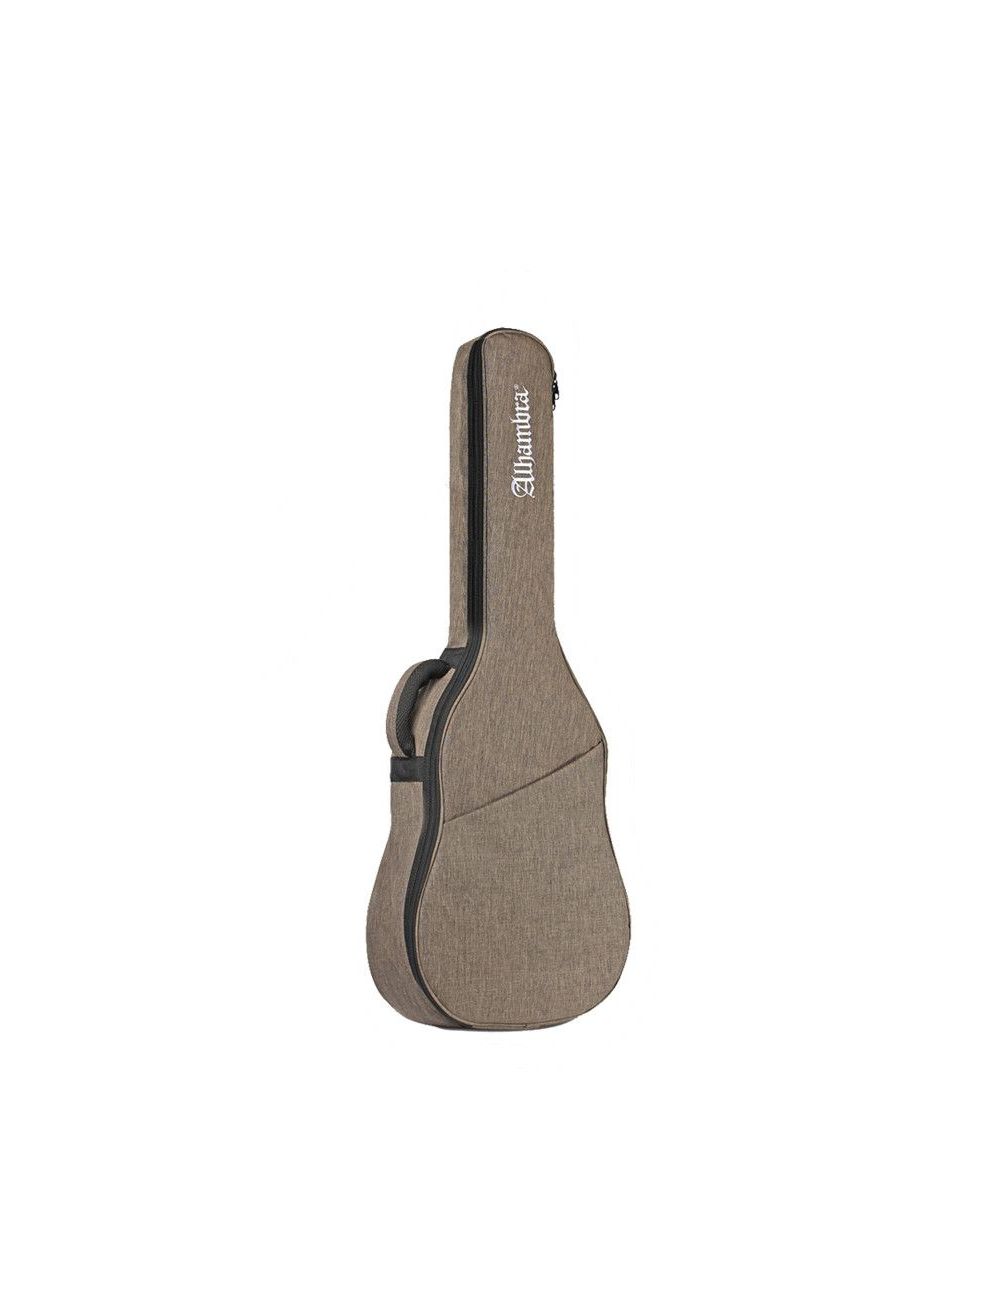 Alhambra 9733 1/2 Classical guitar Bag 9733 Special sizes